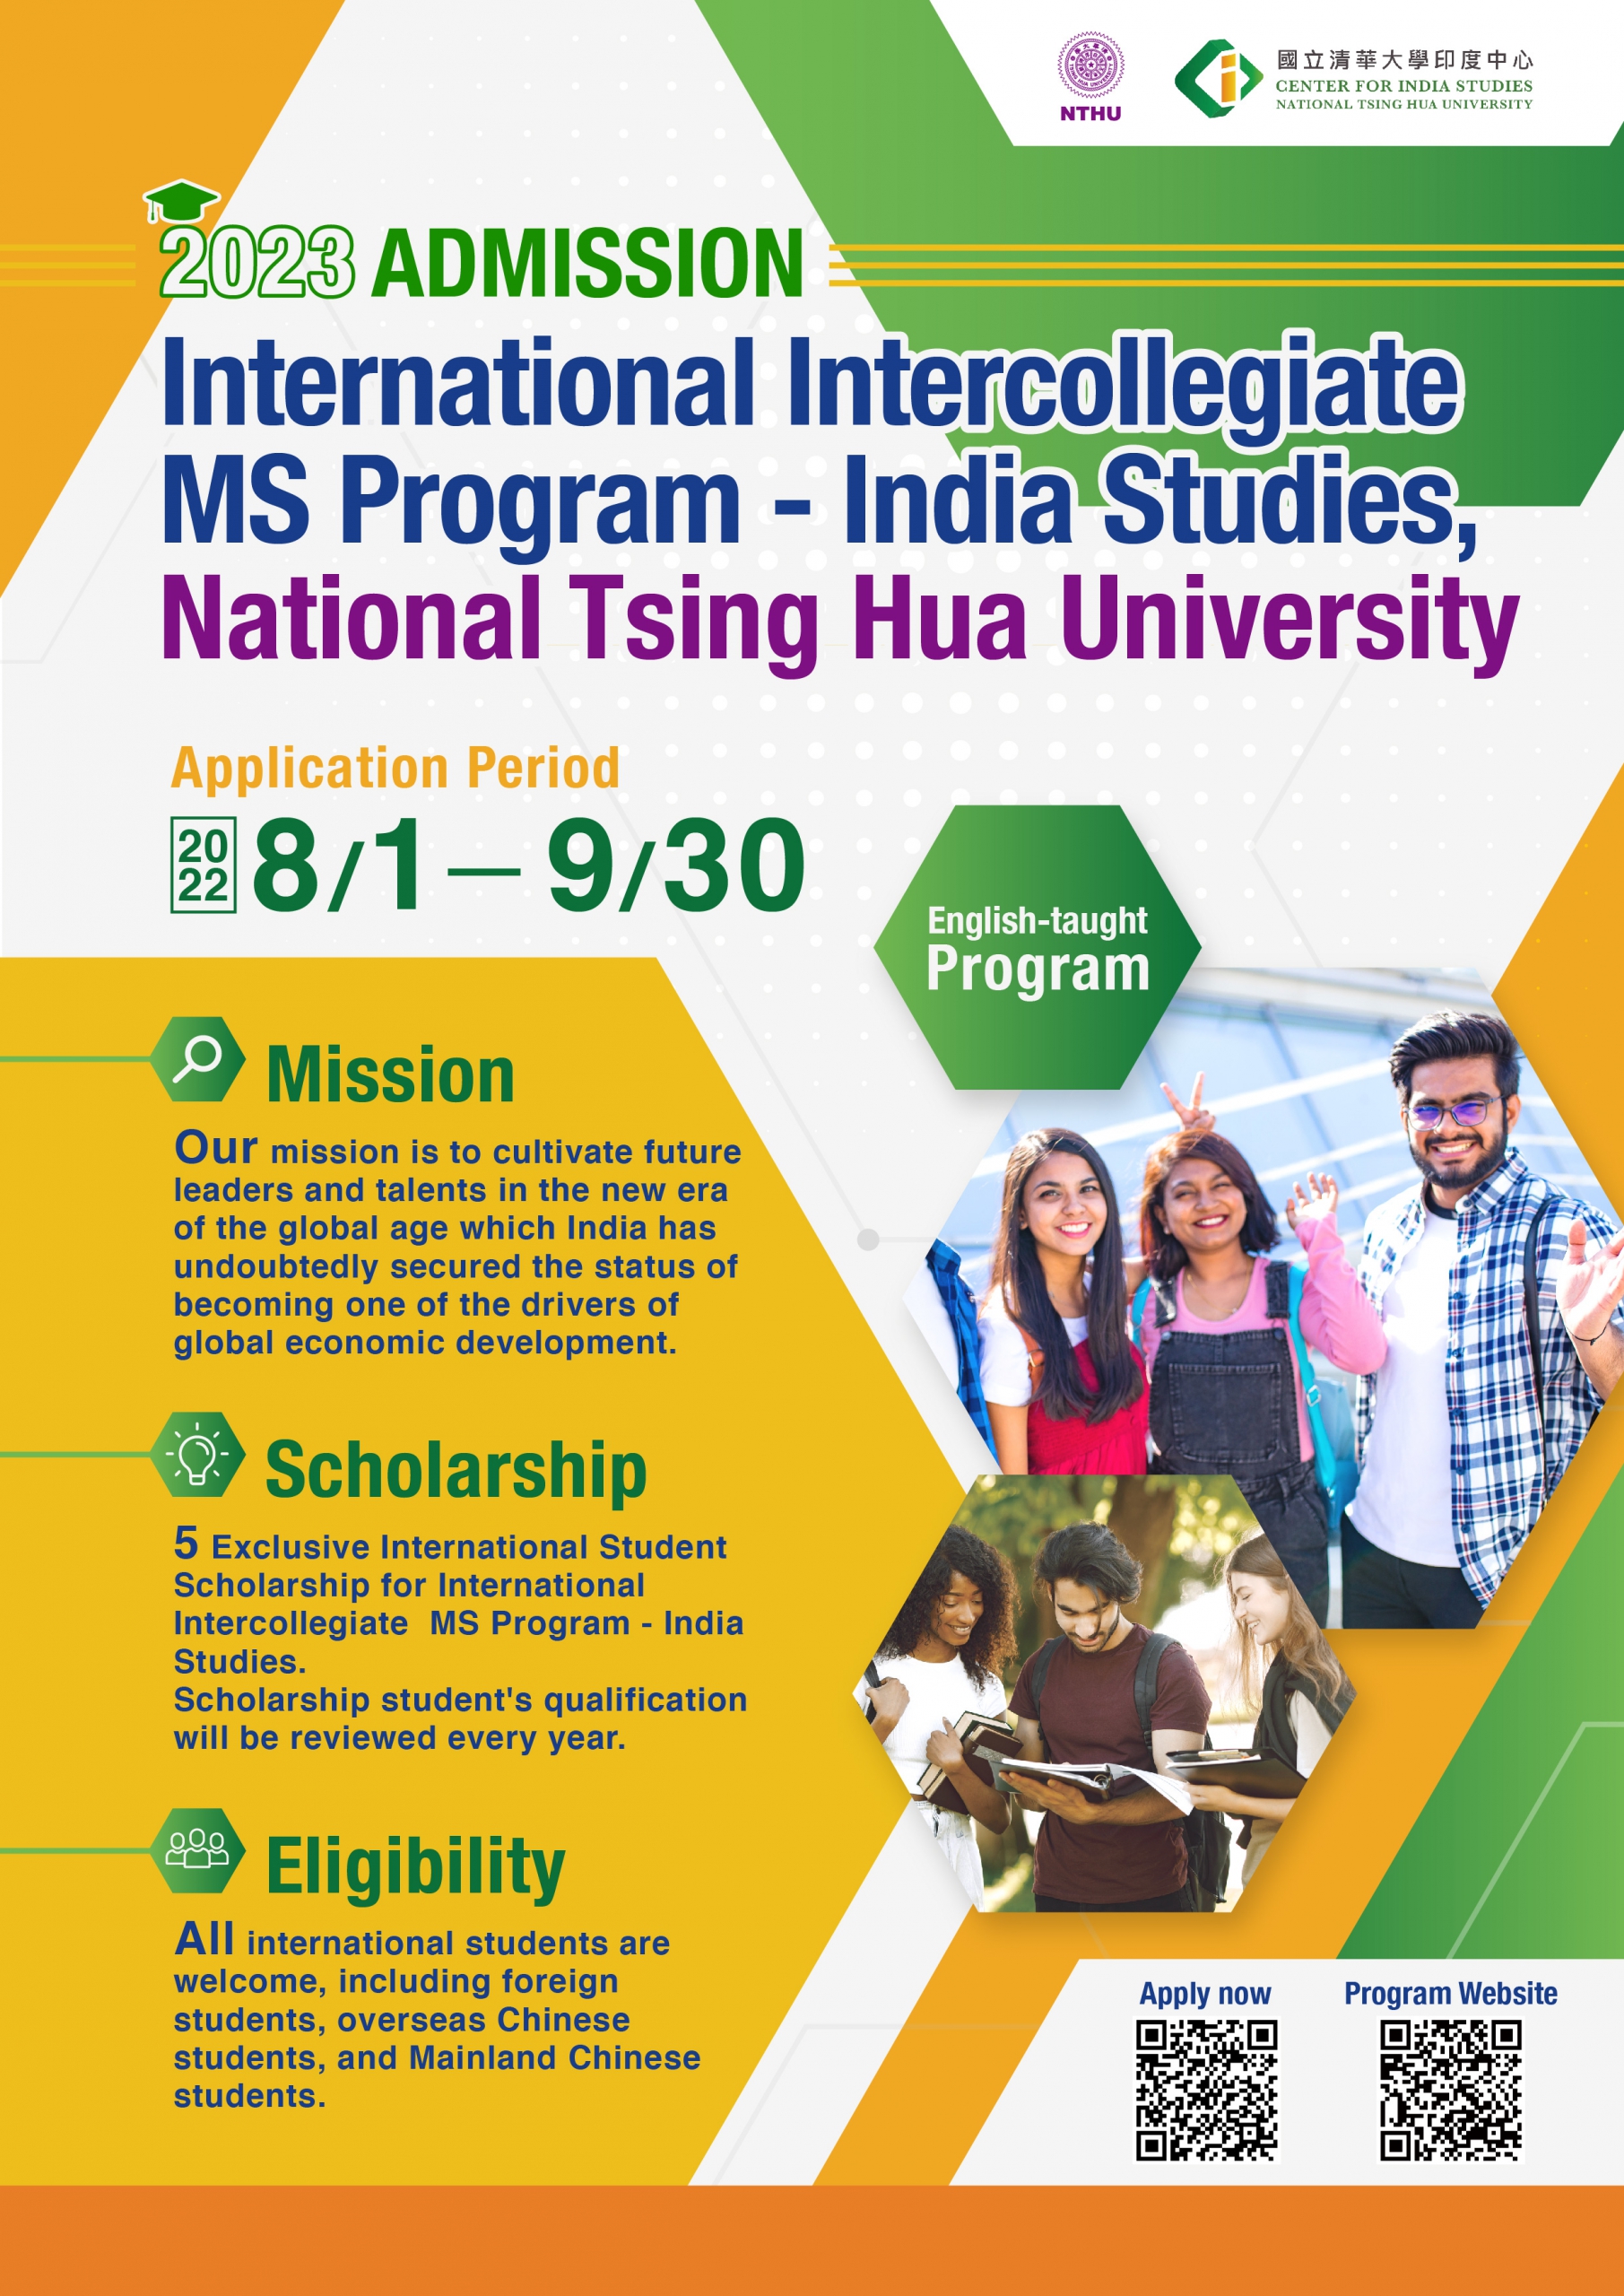 【2022.7.25】International Intercollegiate MS Program – India Studies — National Tsing Hua University, 2023 Admission